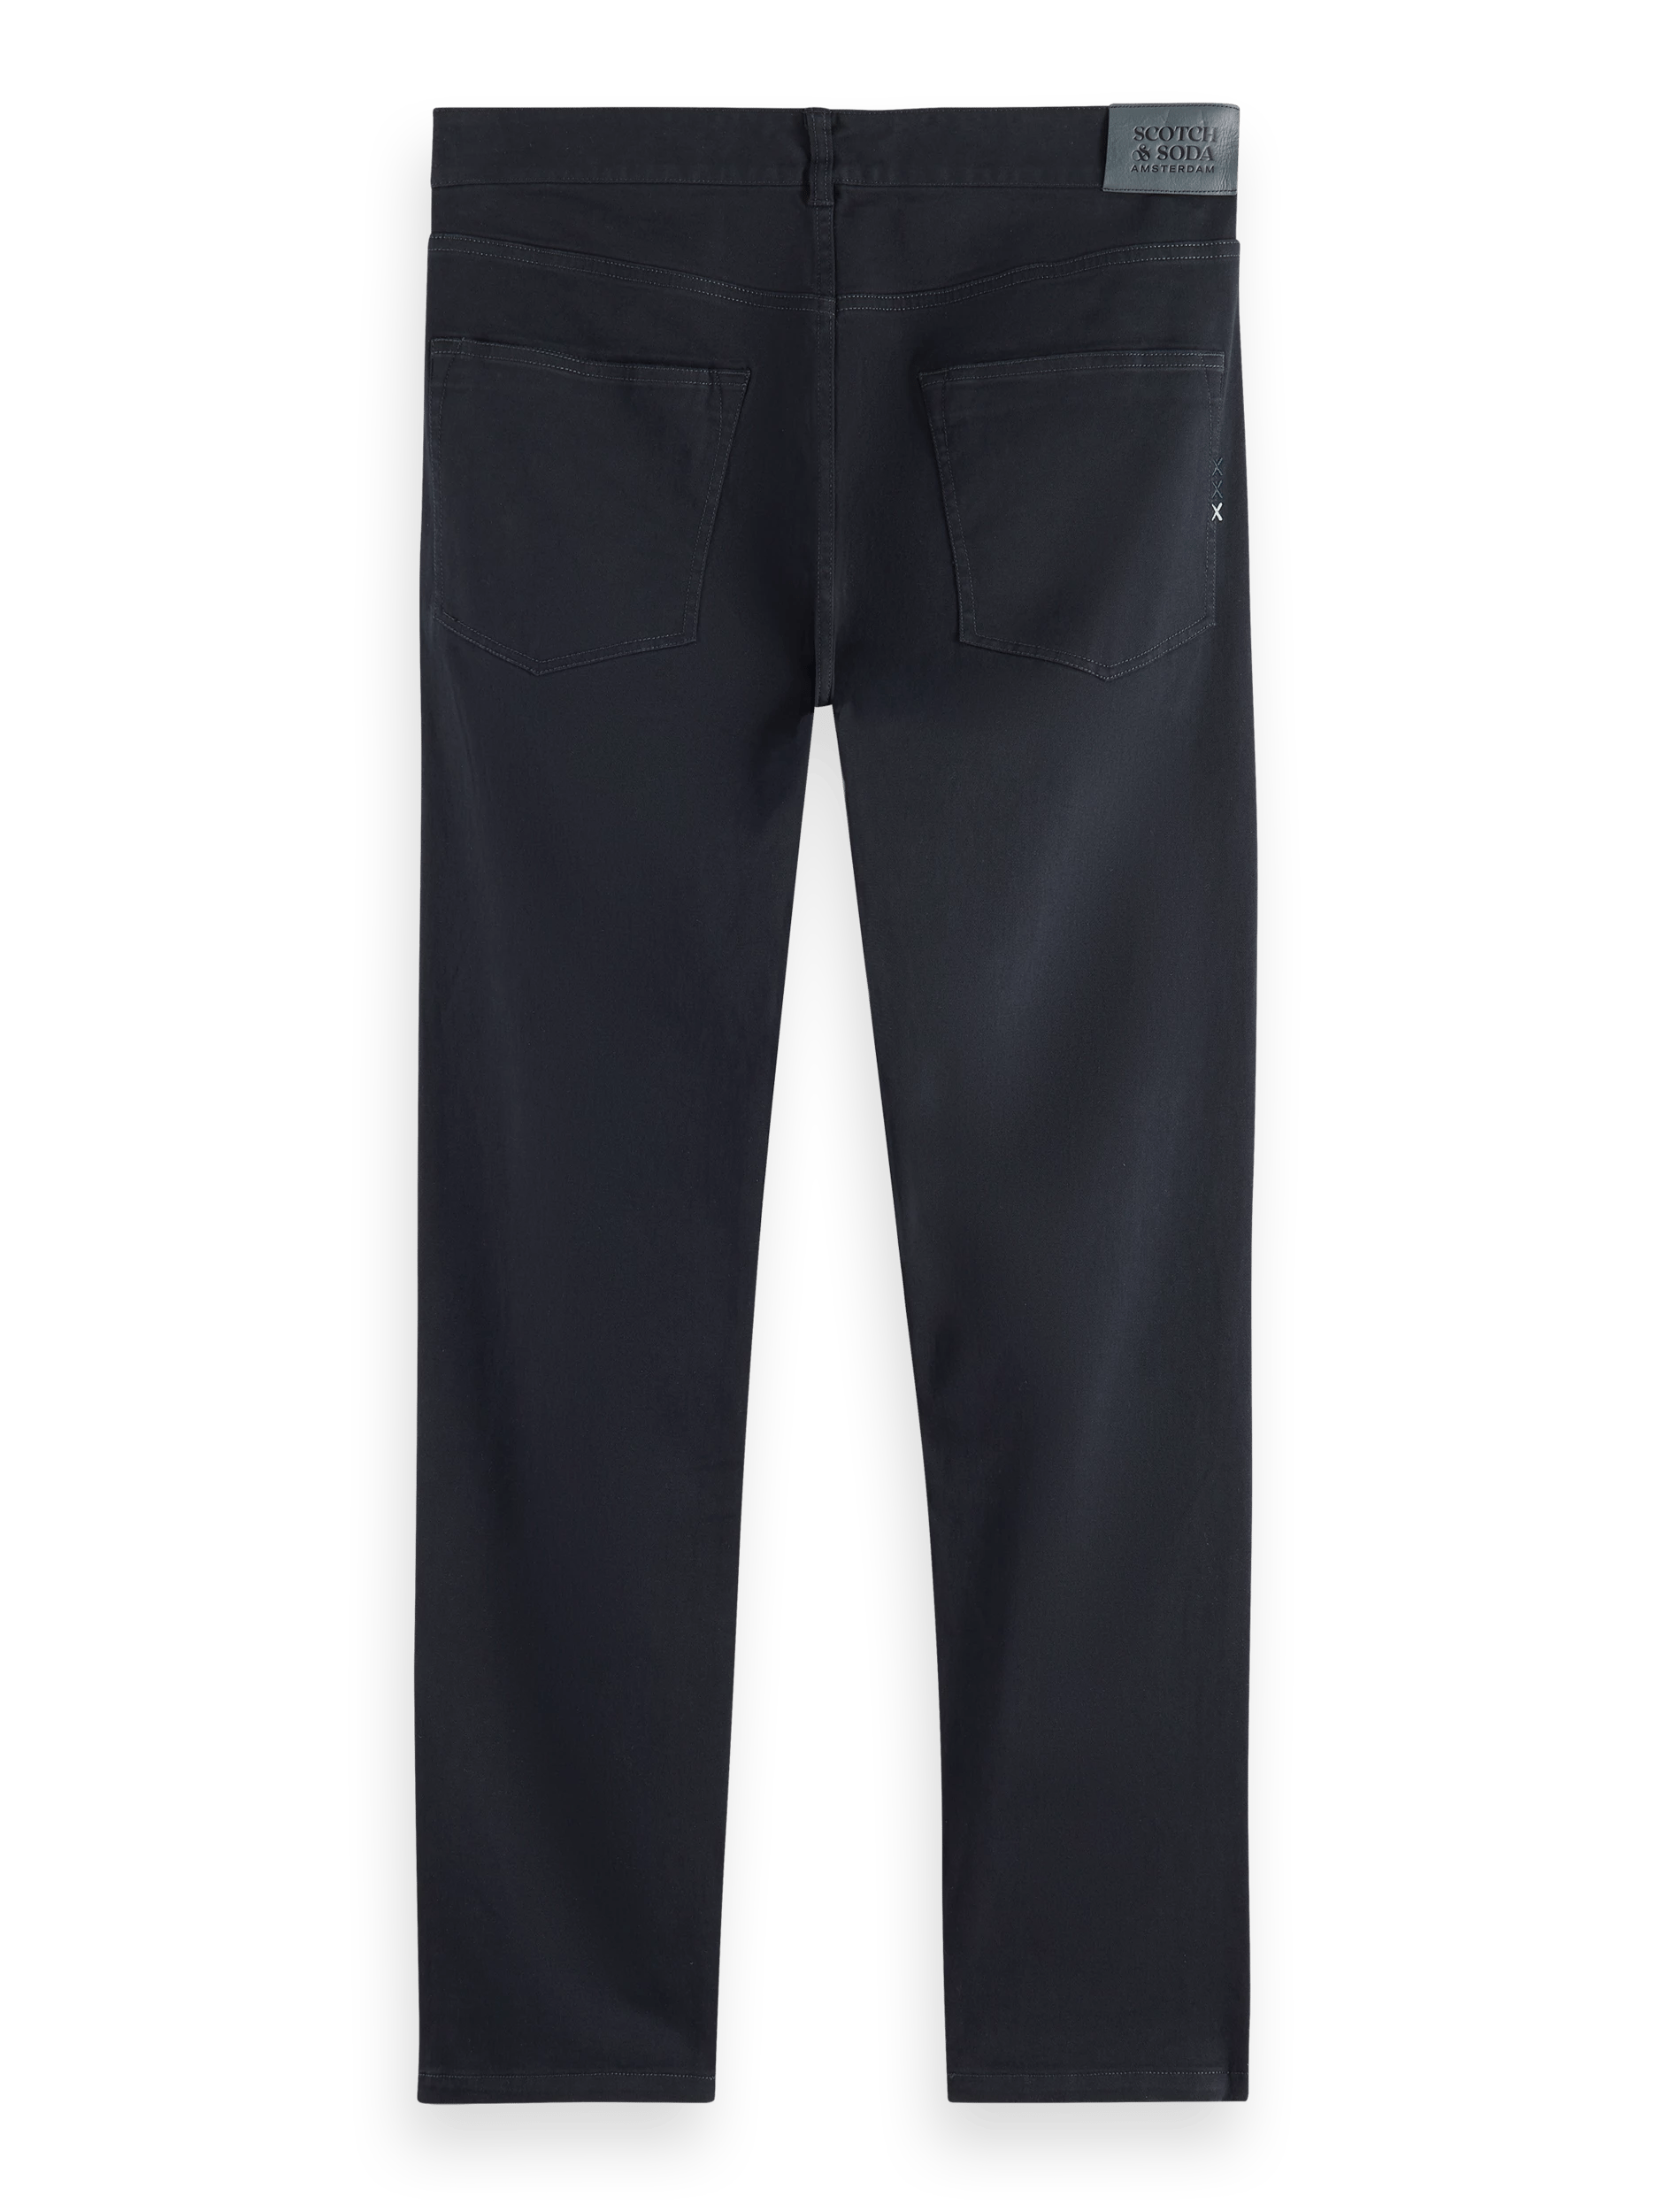 Scotch & Soda Ralston - Regular Slim fit garment-dyed 5-pocket pants BCK